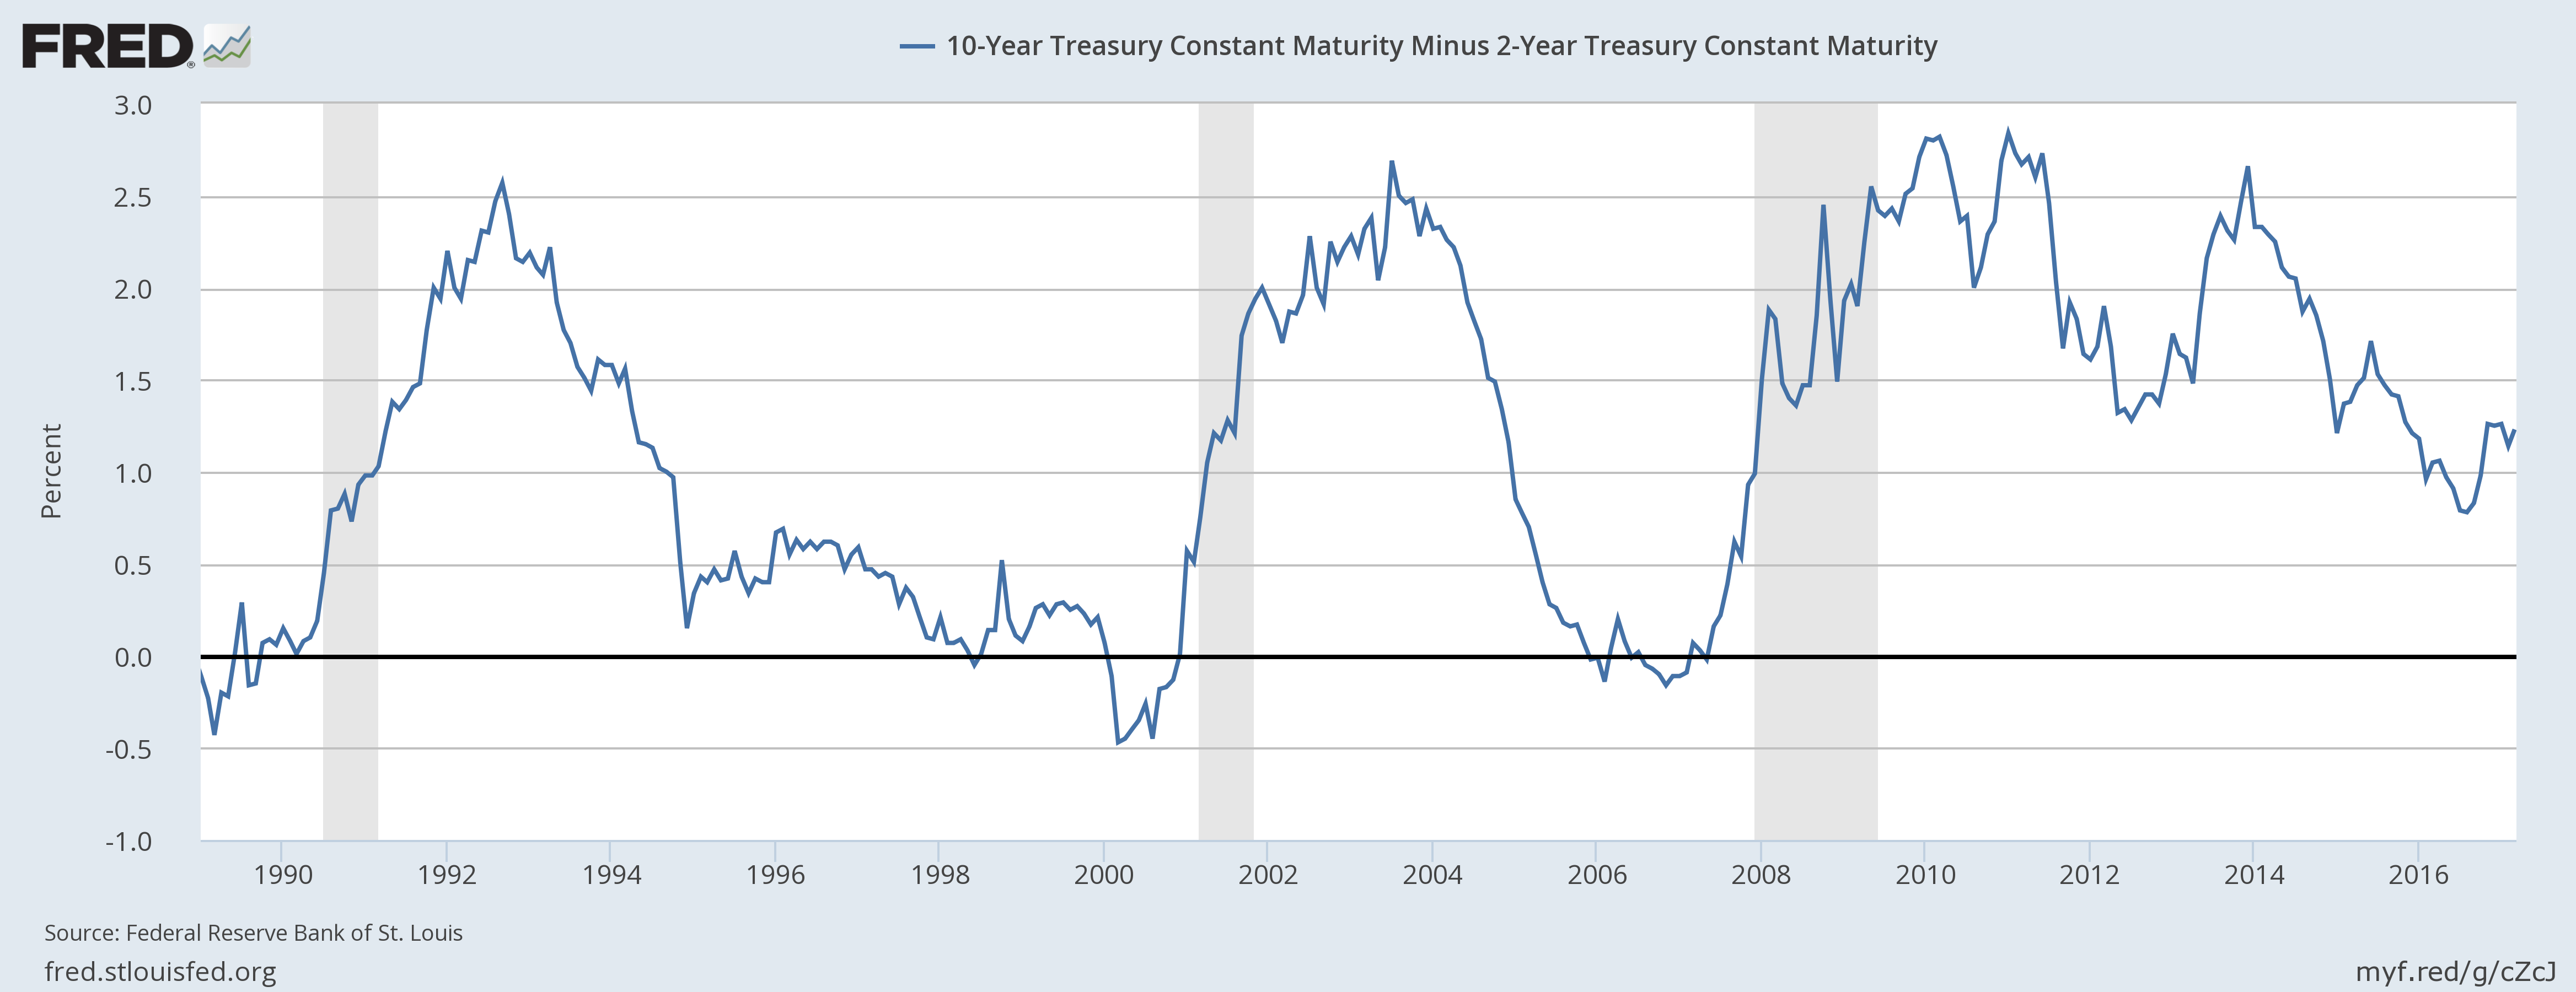 10-Year Treasury Constant Maturity